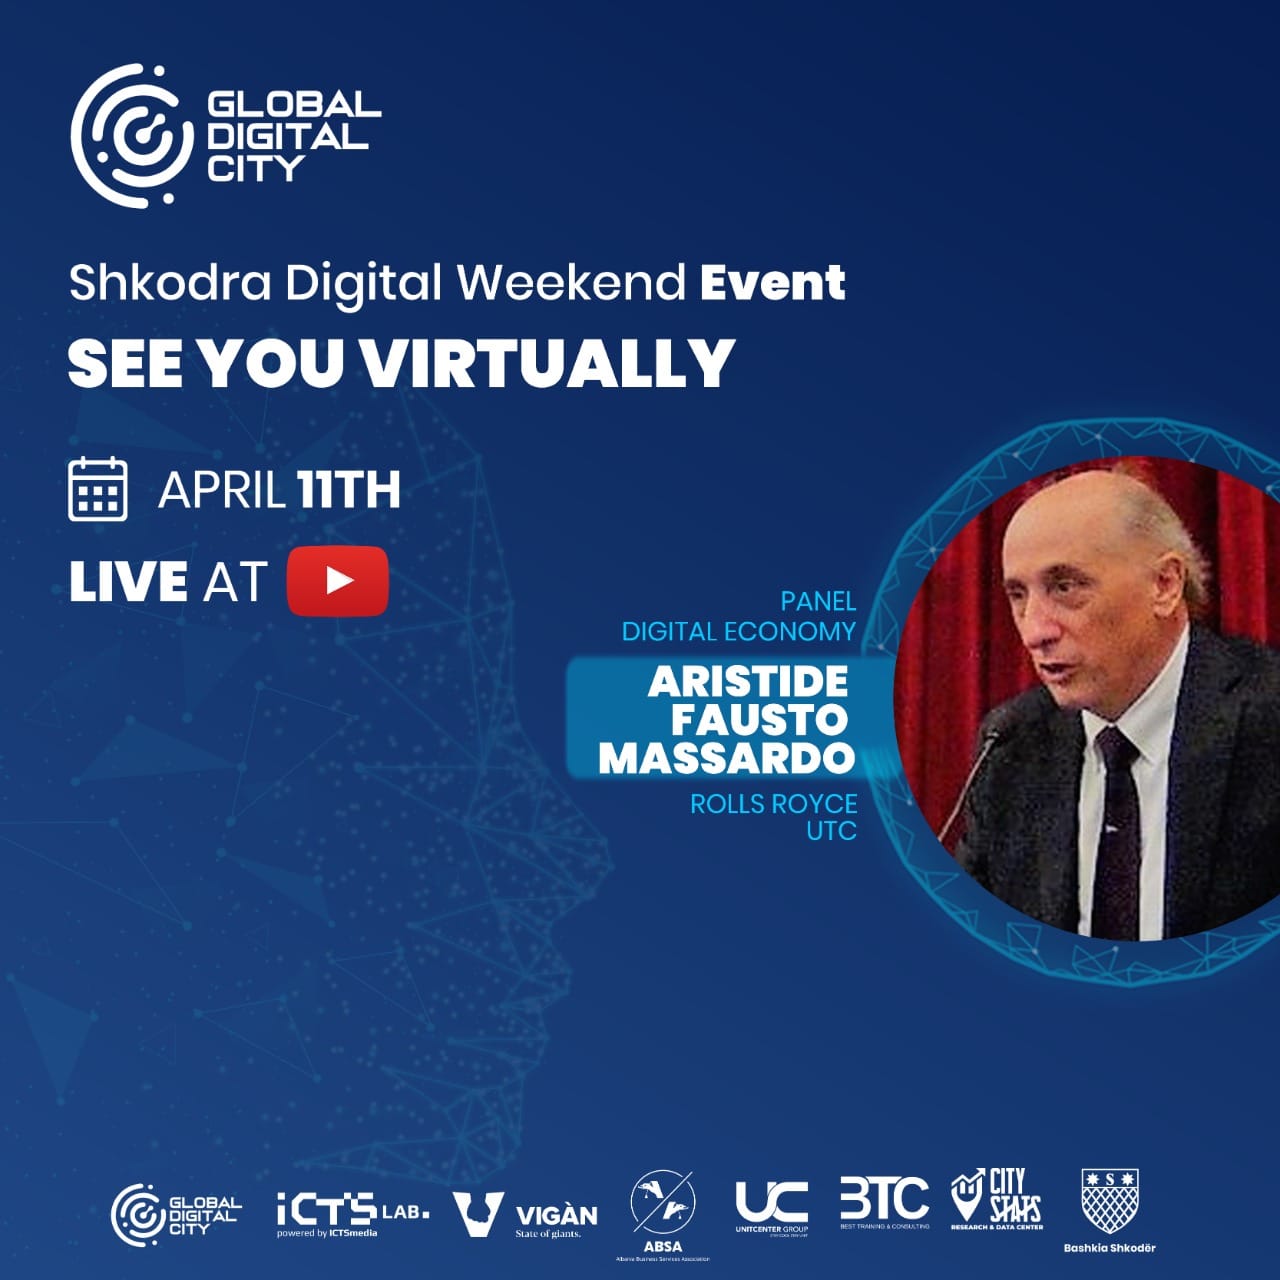 Aristide Fausto Massardo Rolls Royce UTC Digital Event Global Digital City Albania